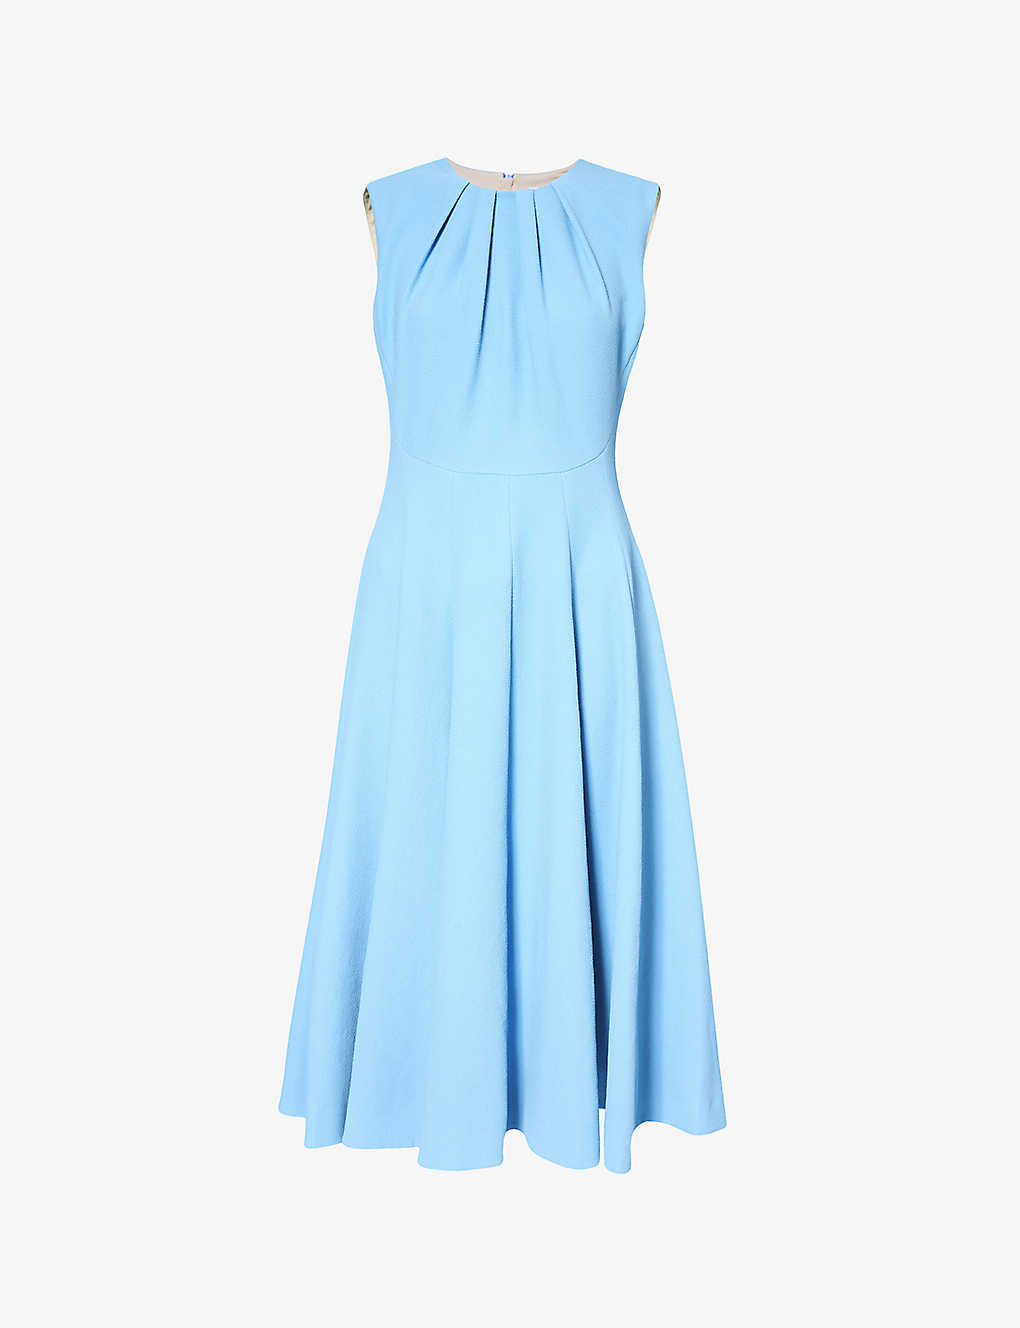 Emilia Wickstead Womens Celeste Blue Marlen Sleeveless Woven Midi Dress